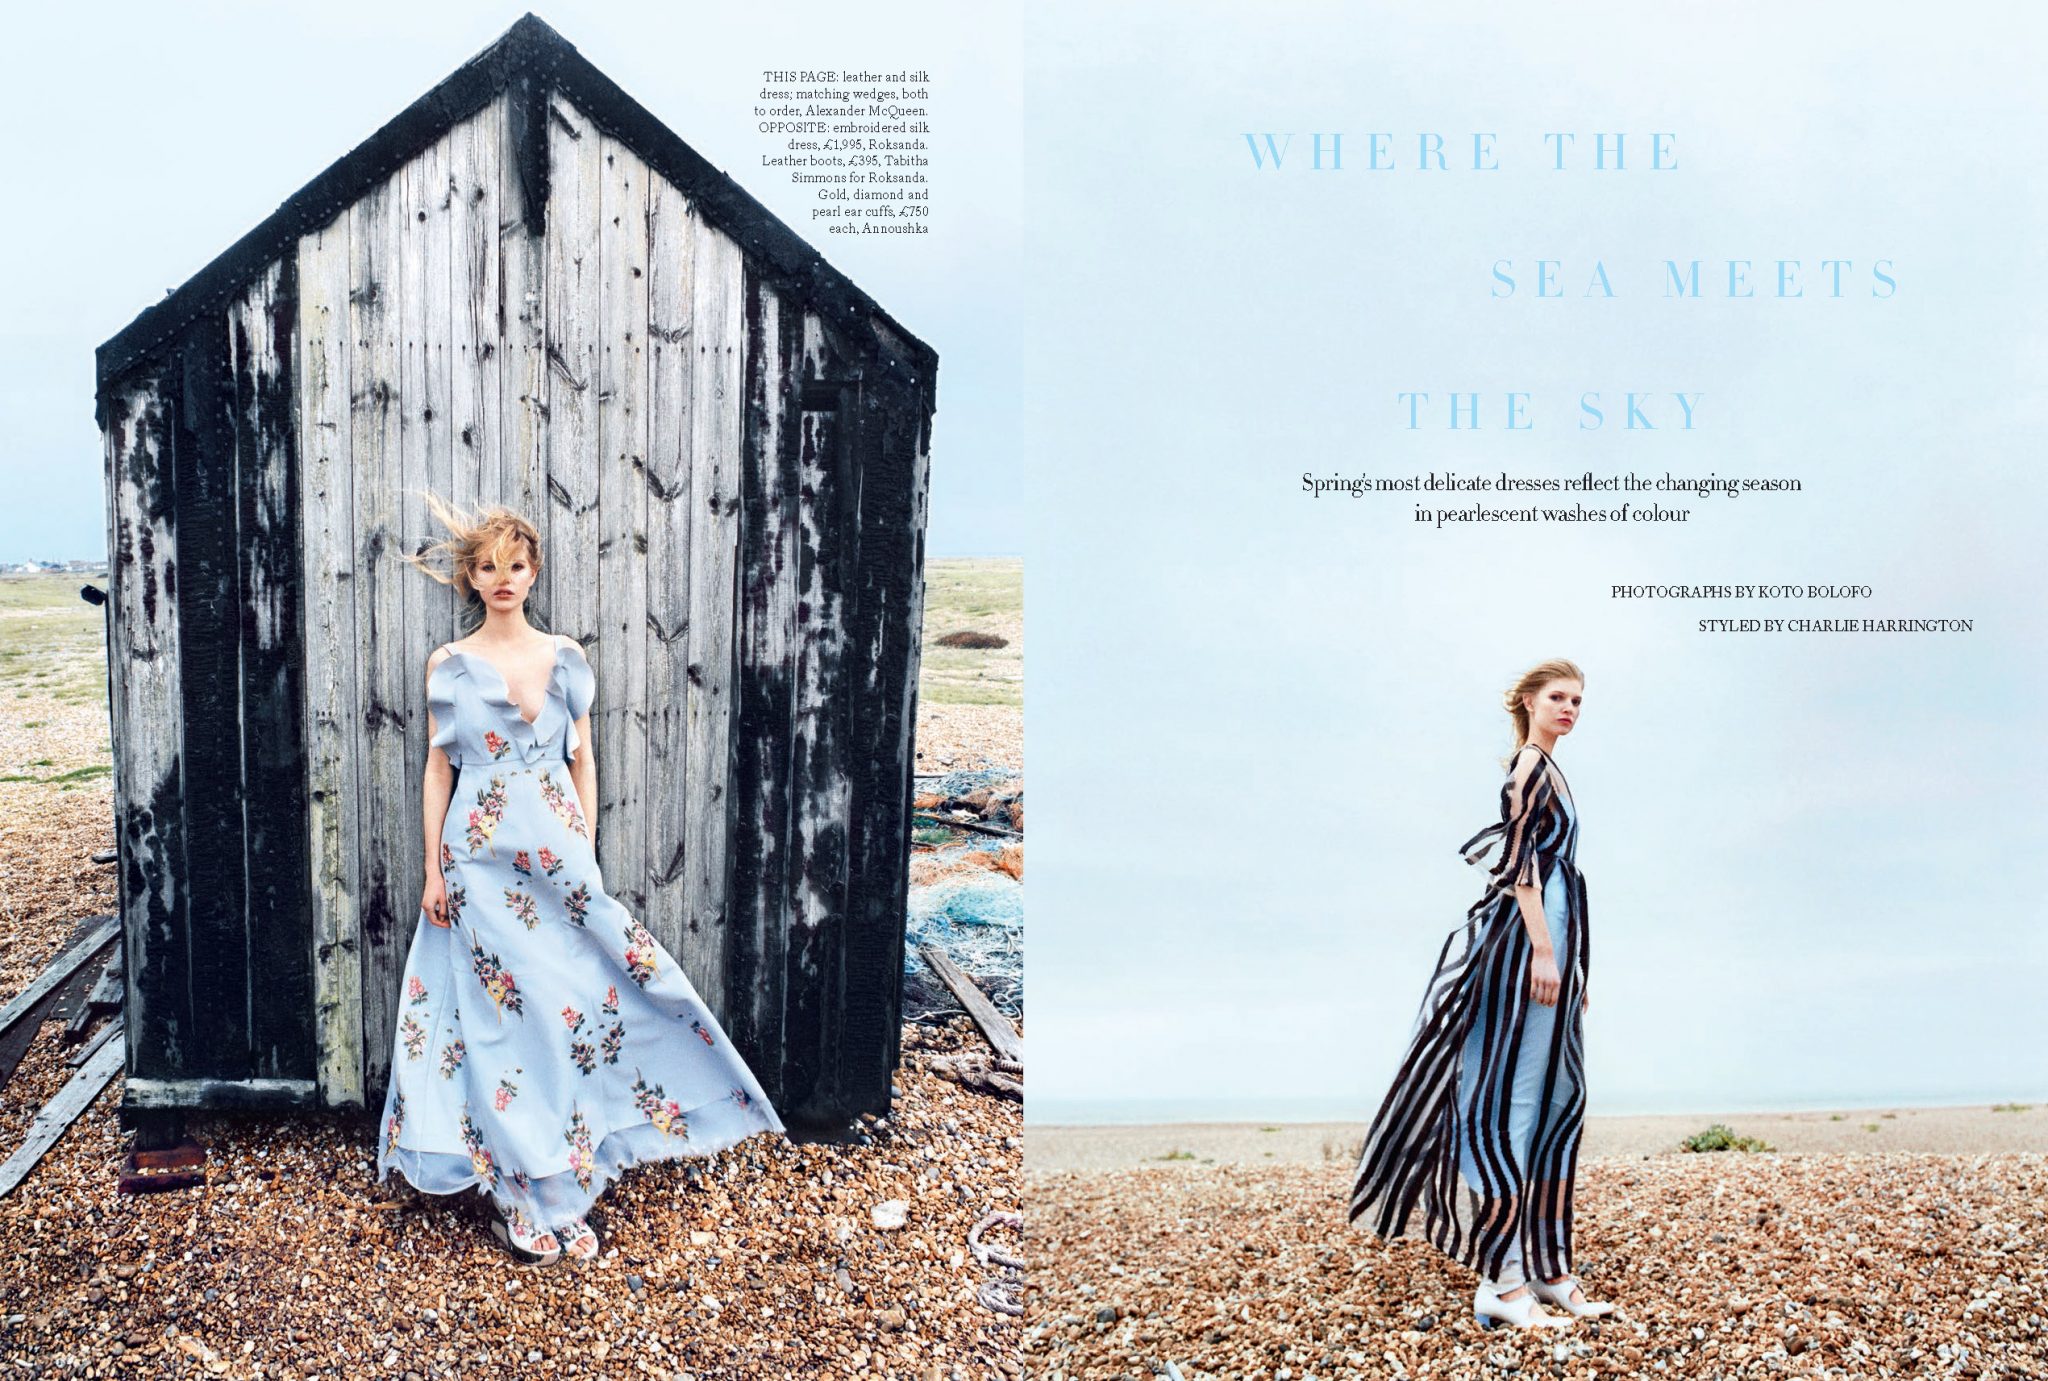 Koto Bolofo | Harper's Bazaar UK: The Beauty and the Beach  | 2